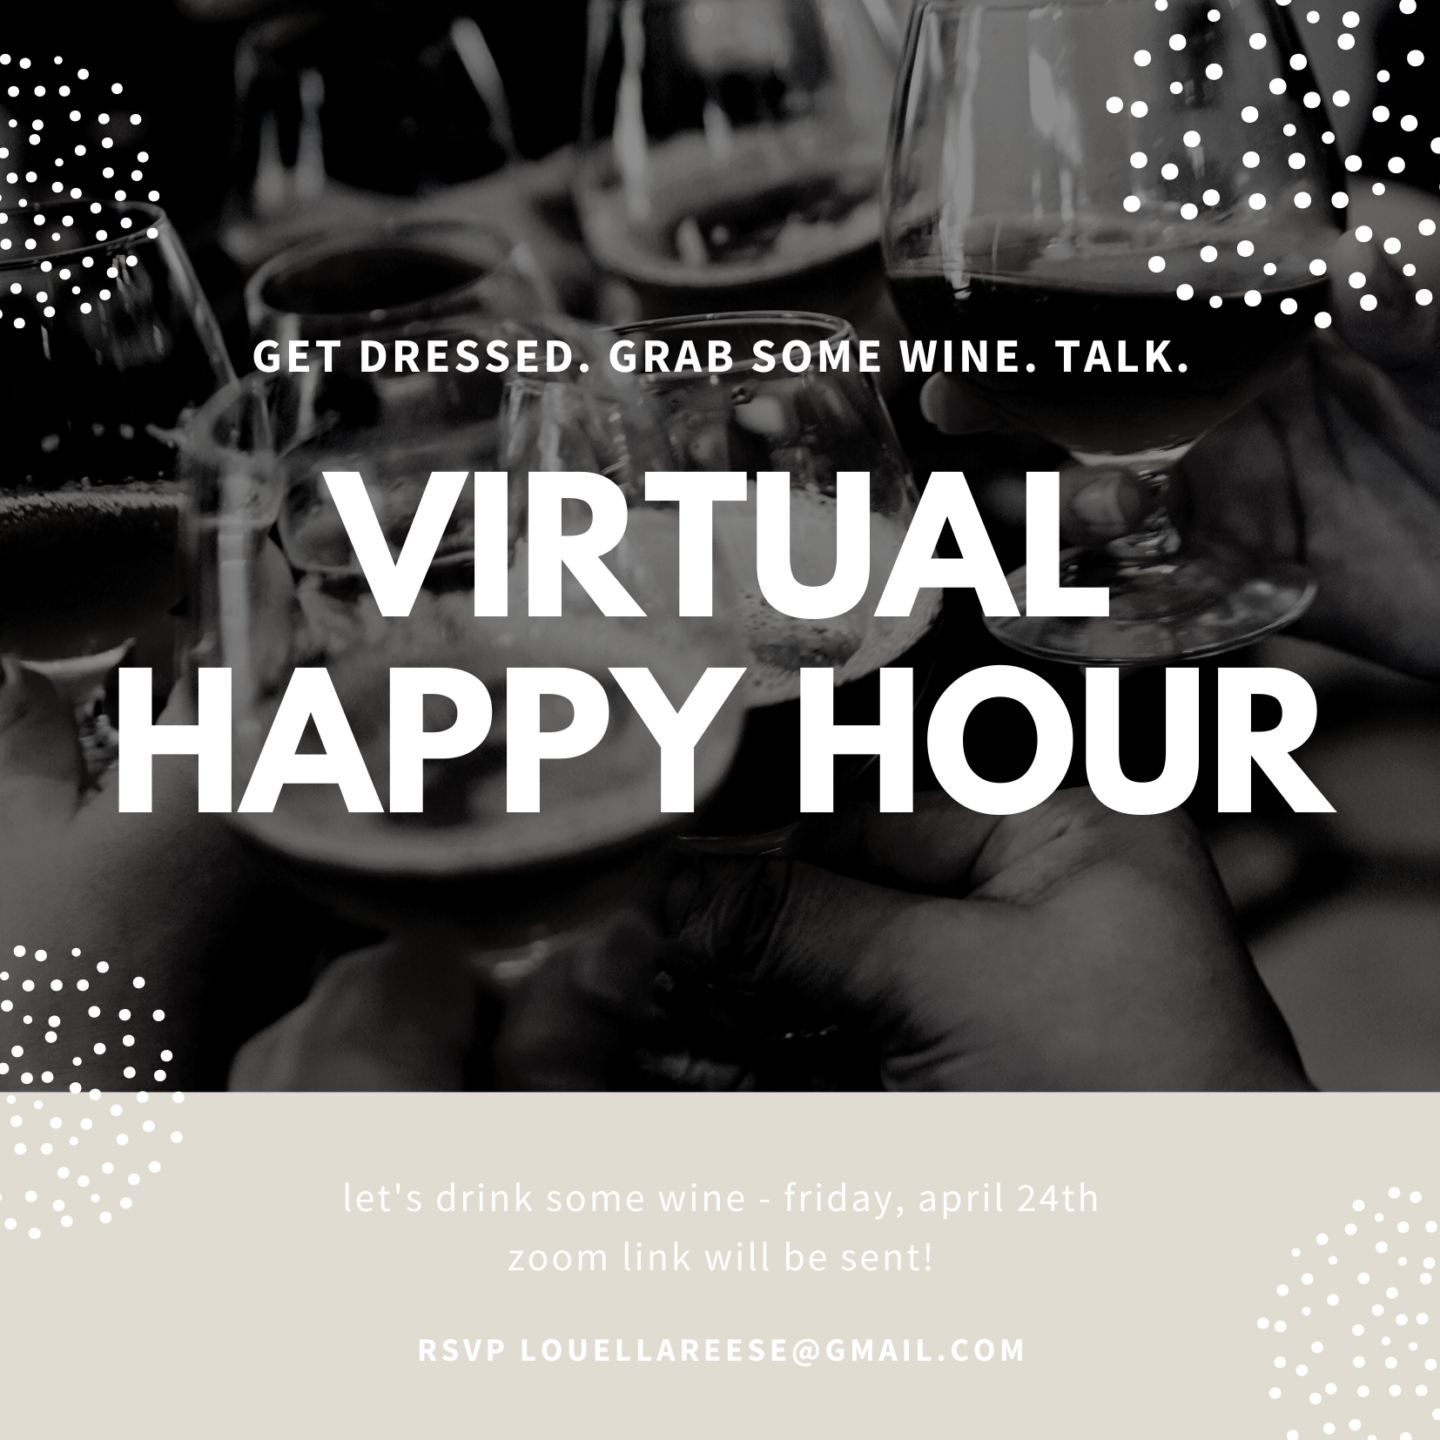 Virtual Happy Hour Invitation | Louella Reese